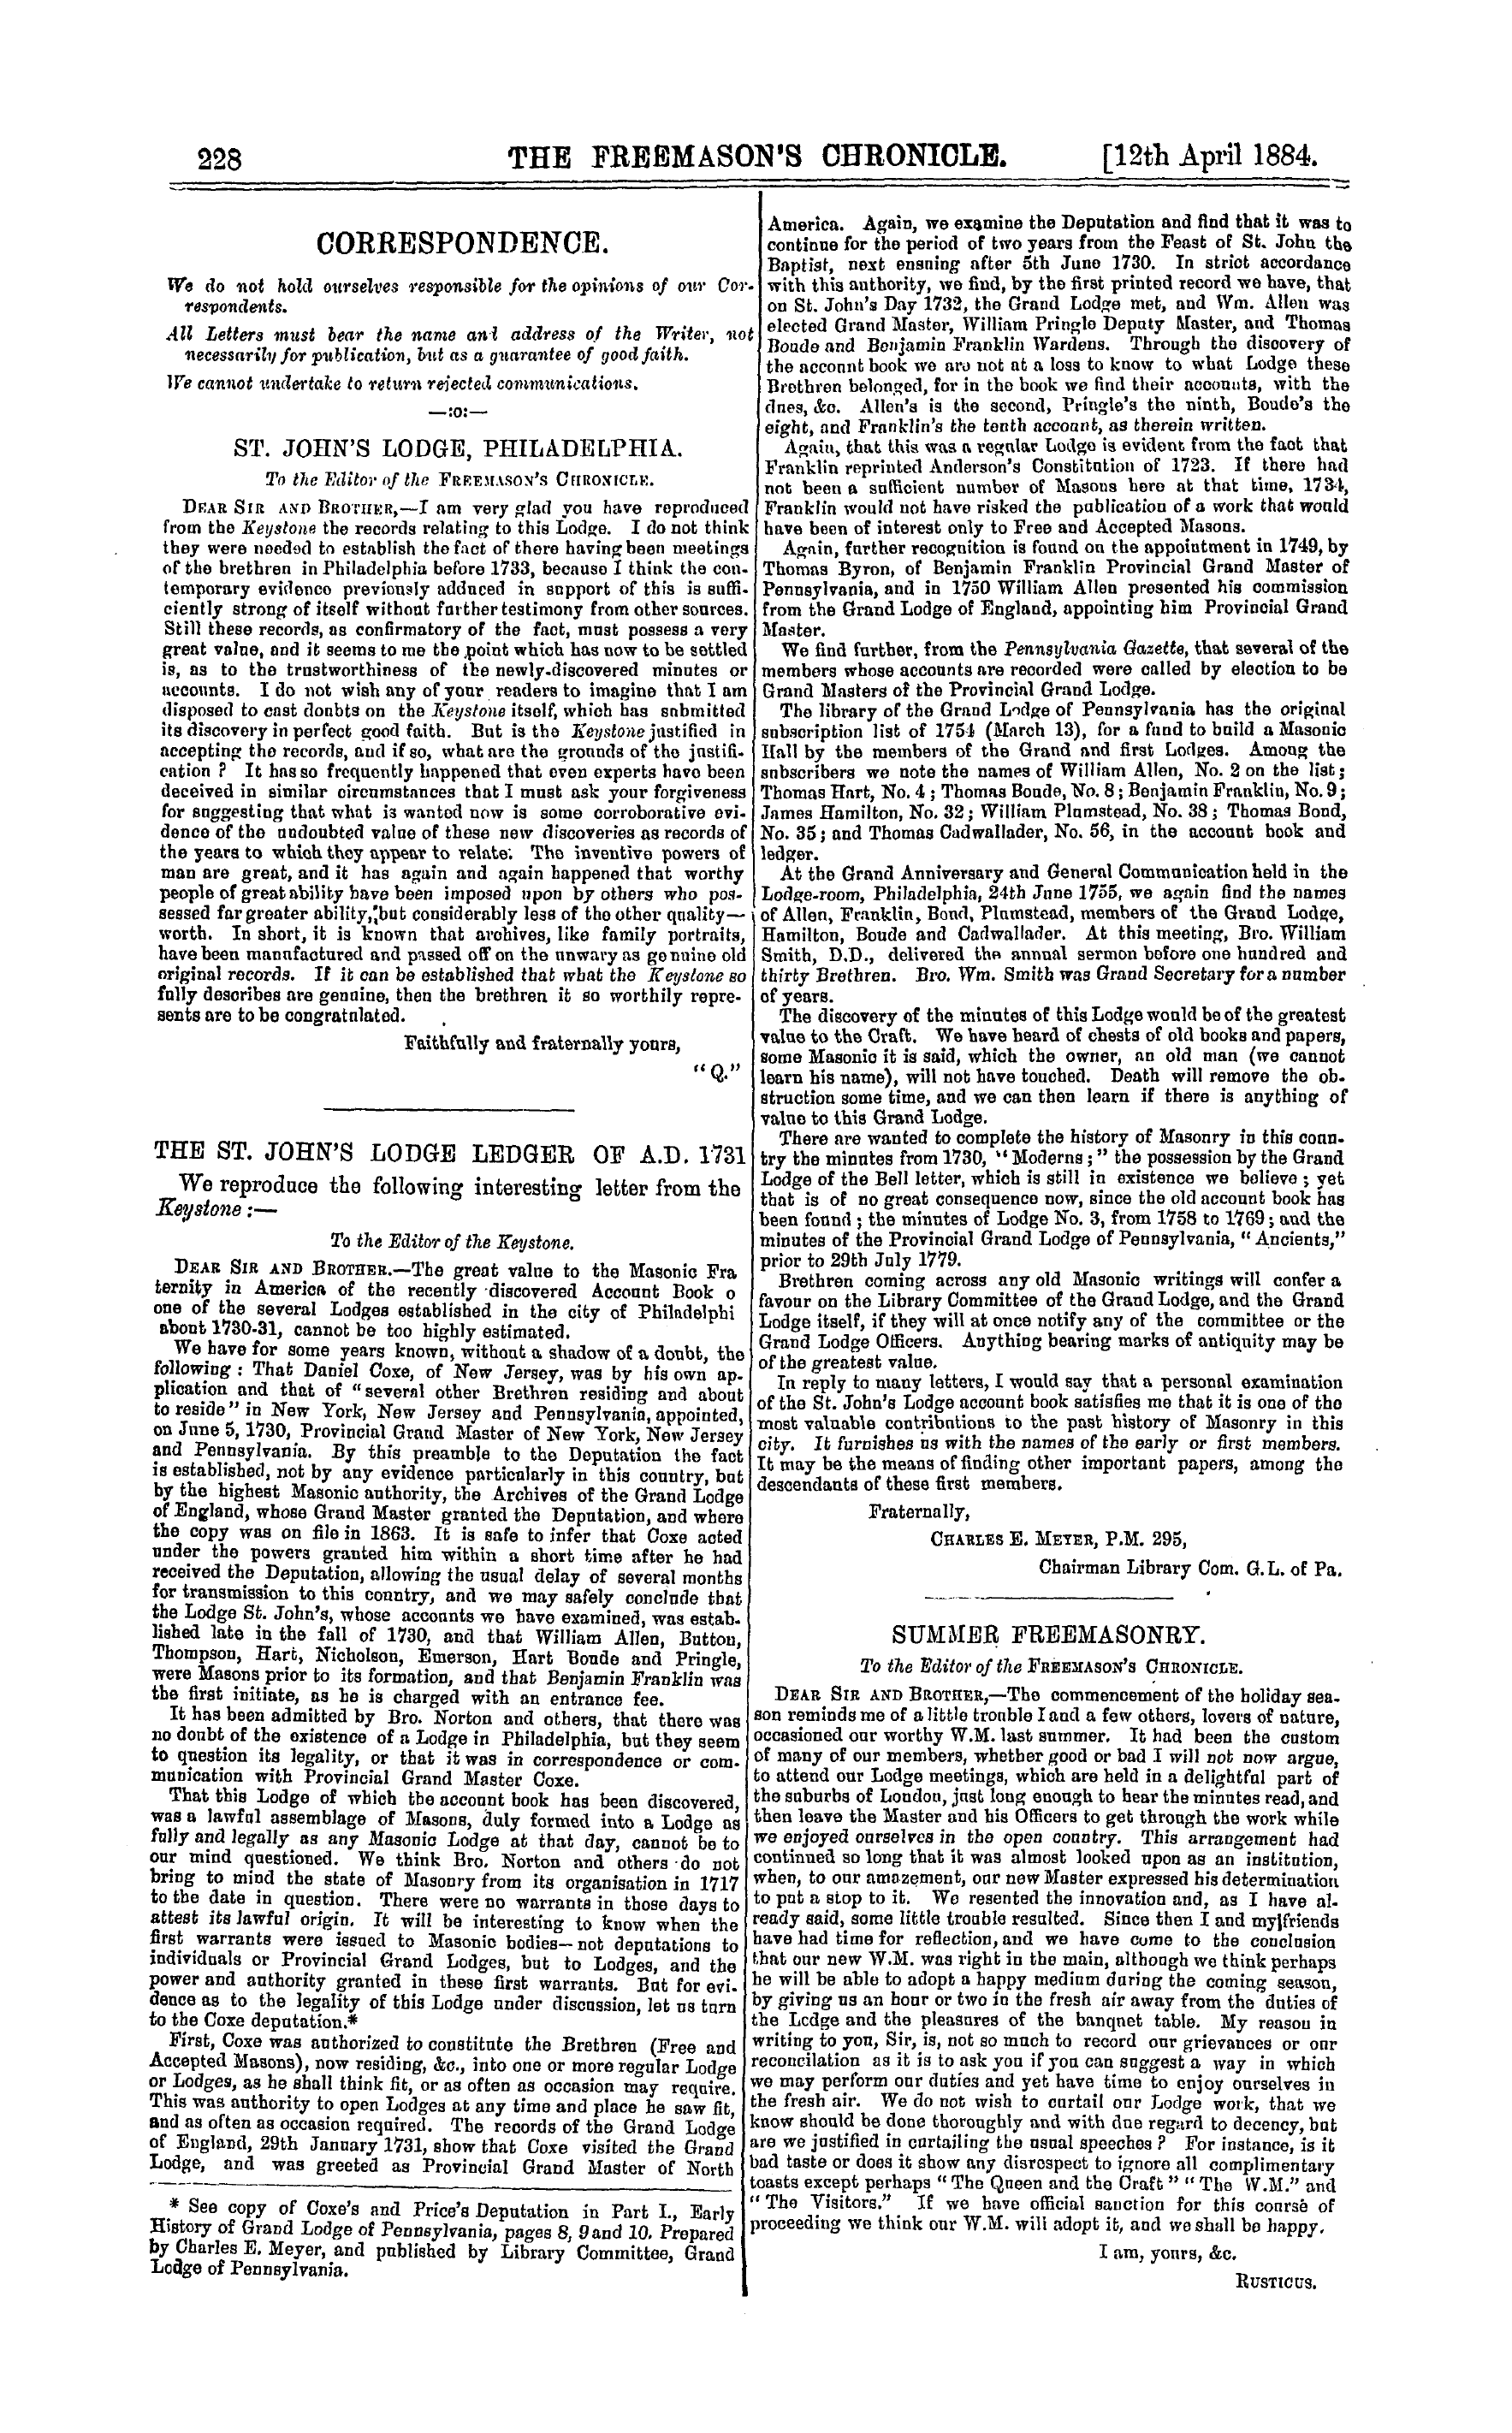 The Freemason's Chronicle: 1884-04-12 - Correspondence.